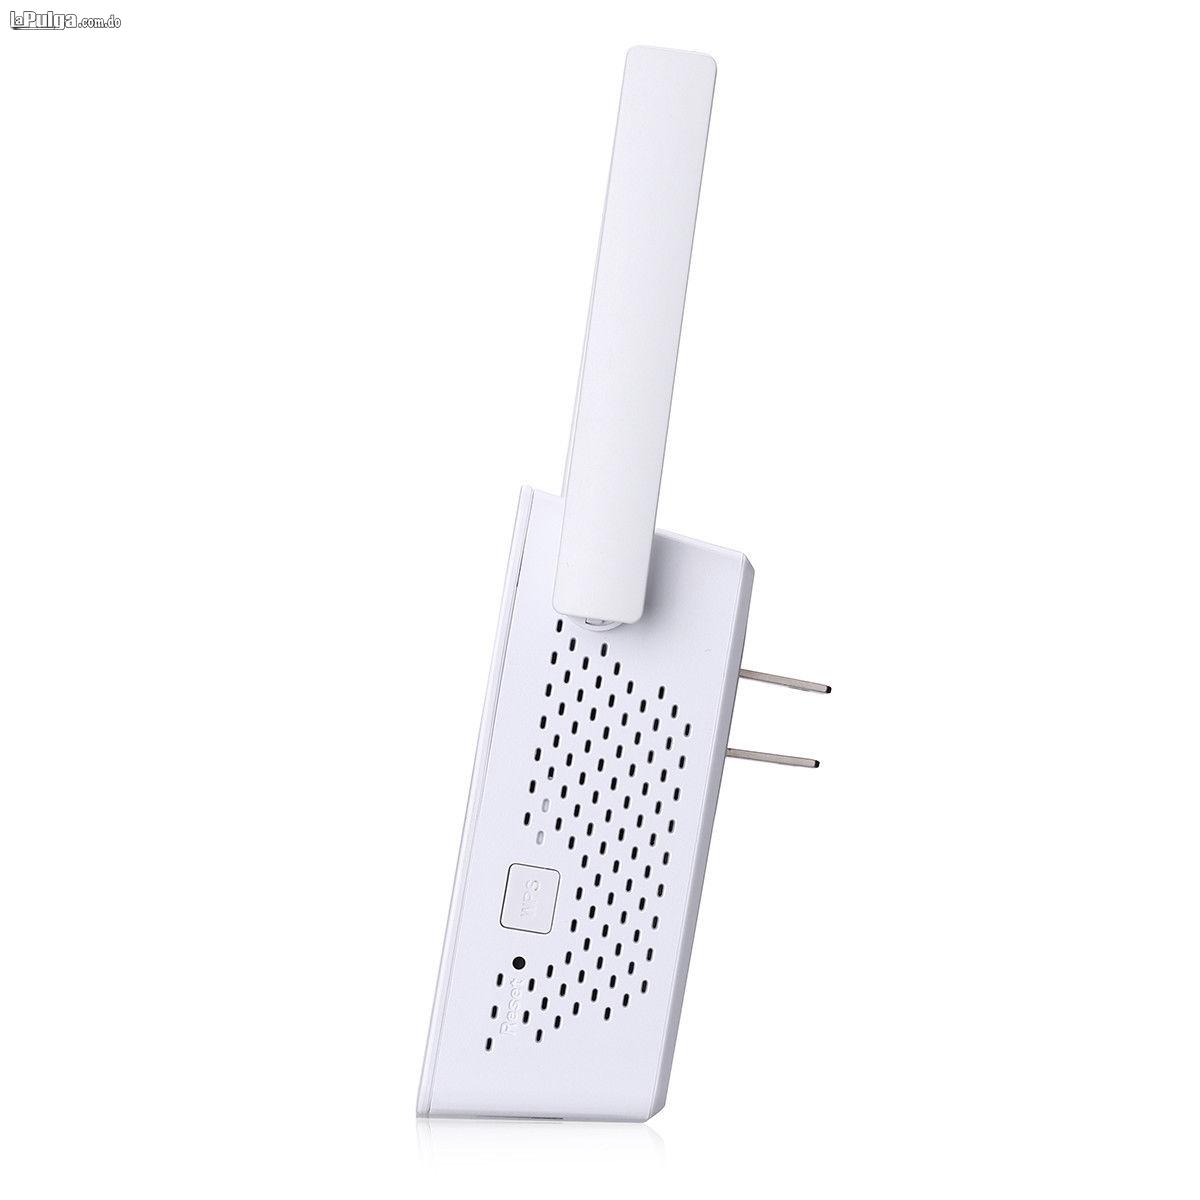 Router Repetidor Wifi Amplificador Doble Antena 300mbs Avanzado Foto 6566363-4.jpg